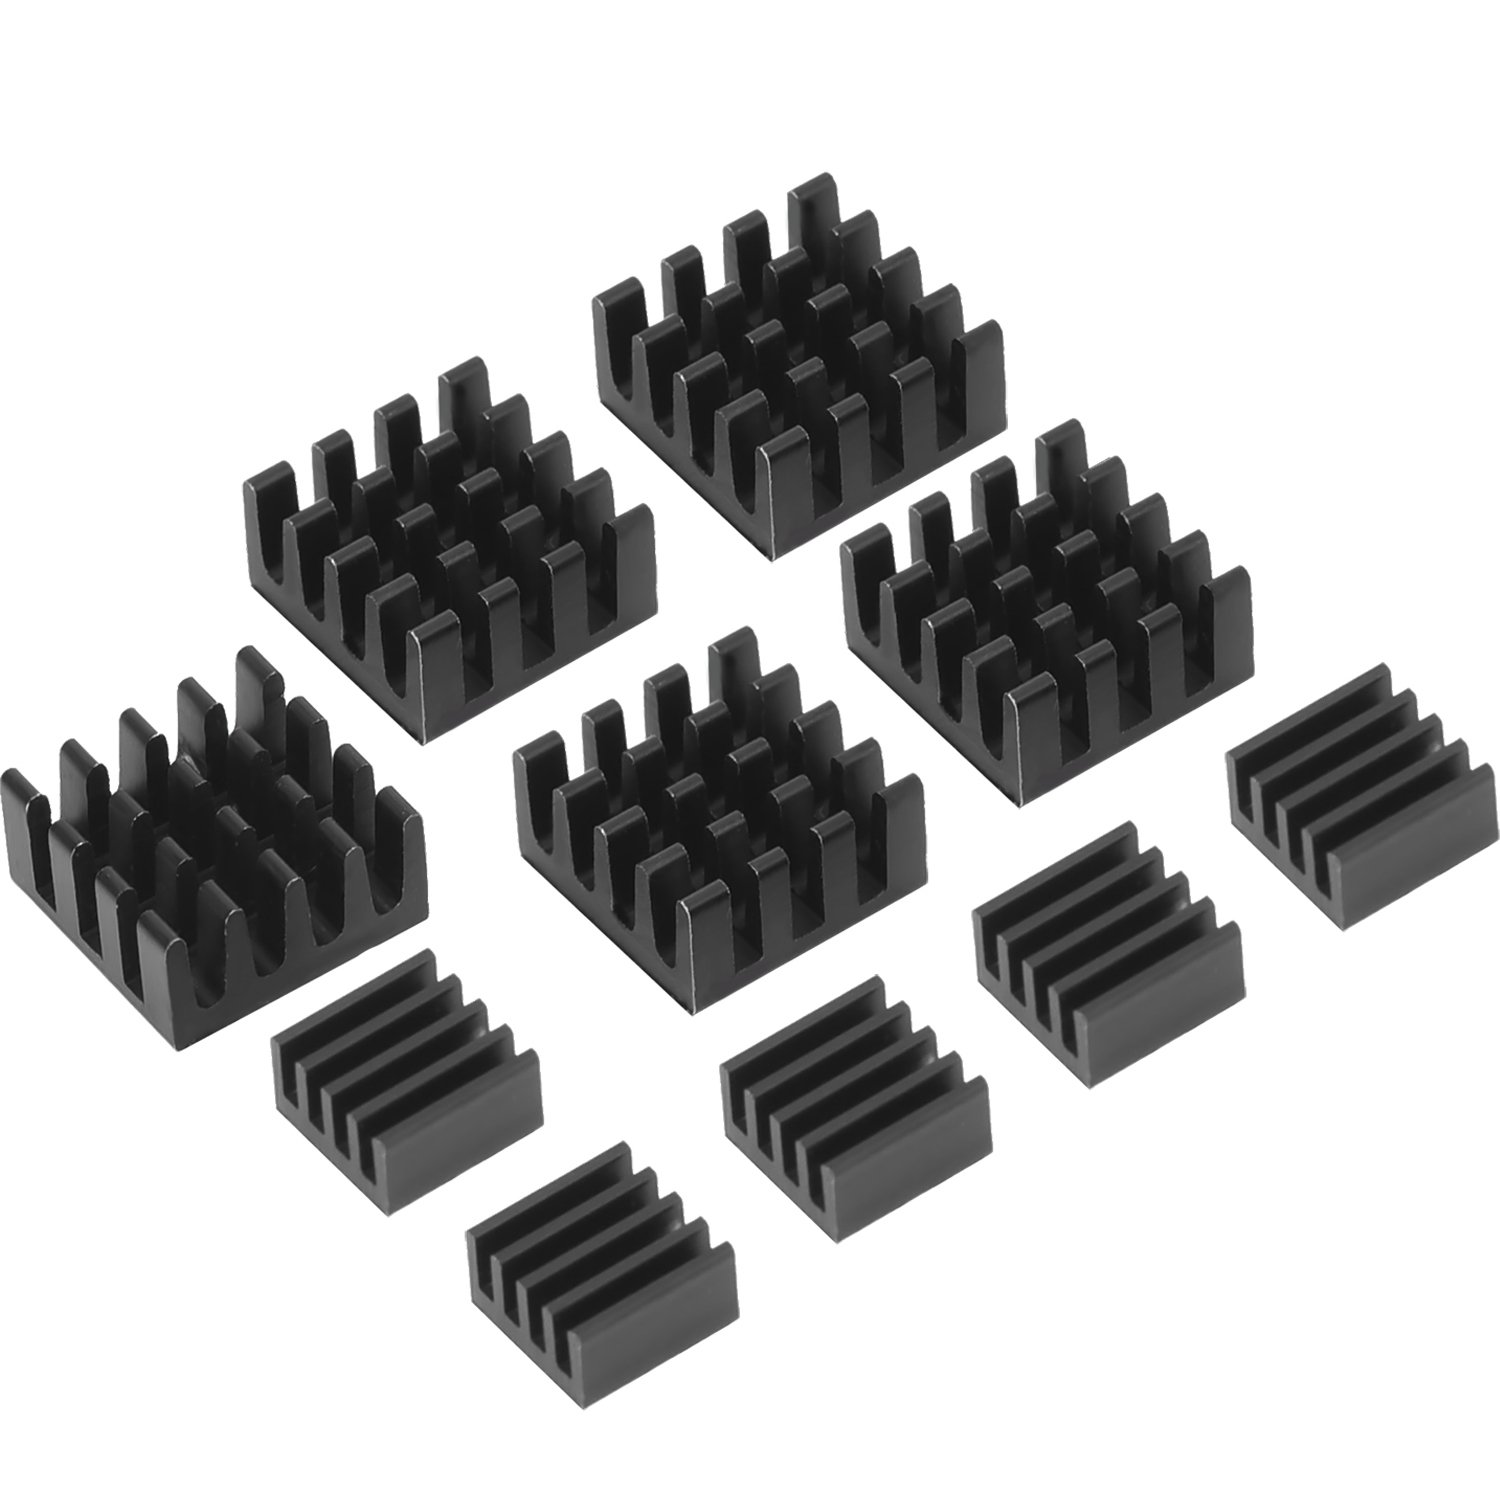 Mudder Black Aluminum Heatsink Cooler Cooling Kit for Raspberry Pi 3, Pi 2, Pi Model B+, 10 Pieces